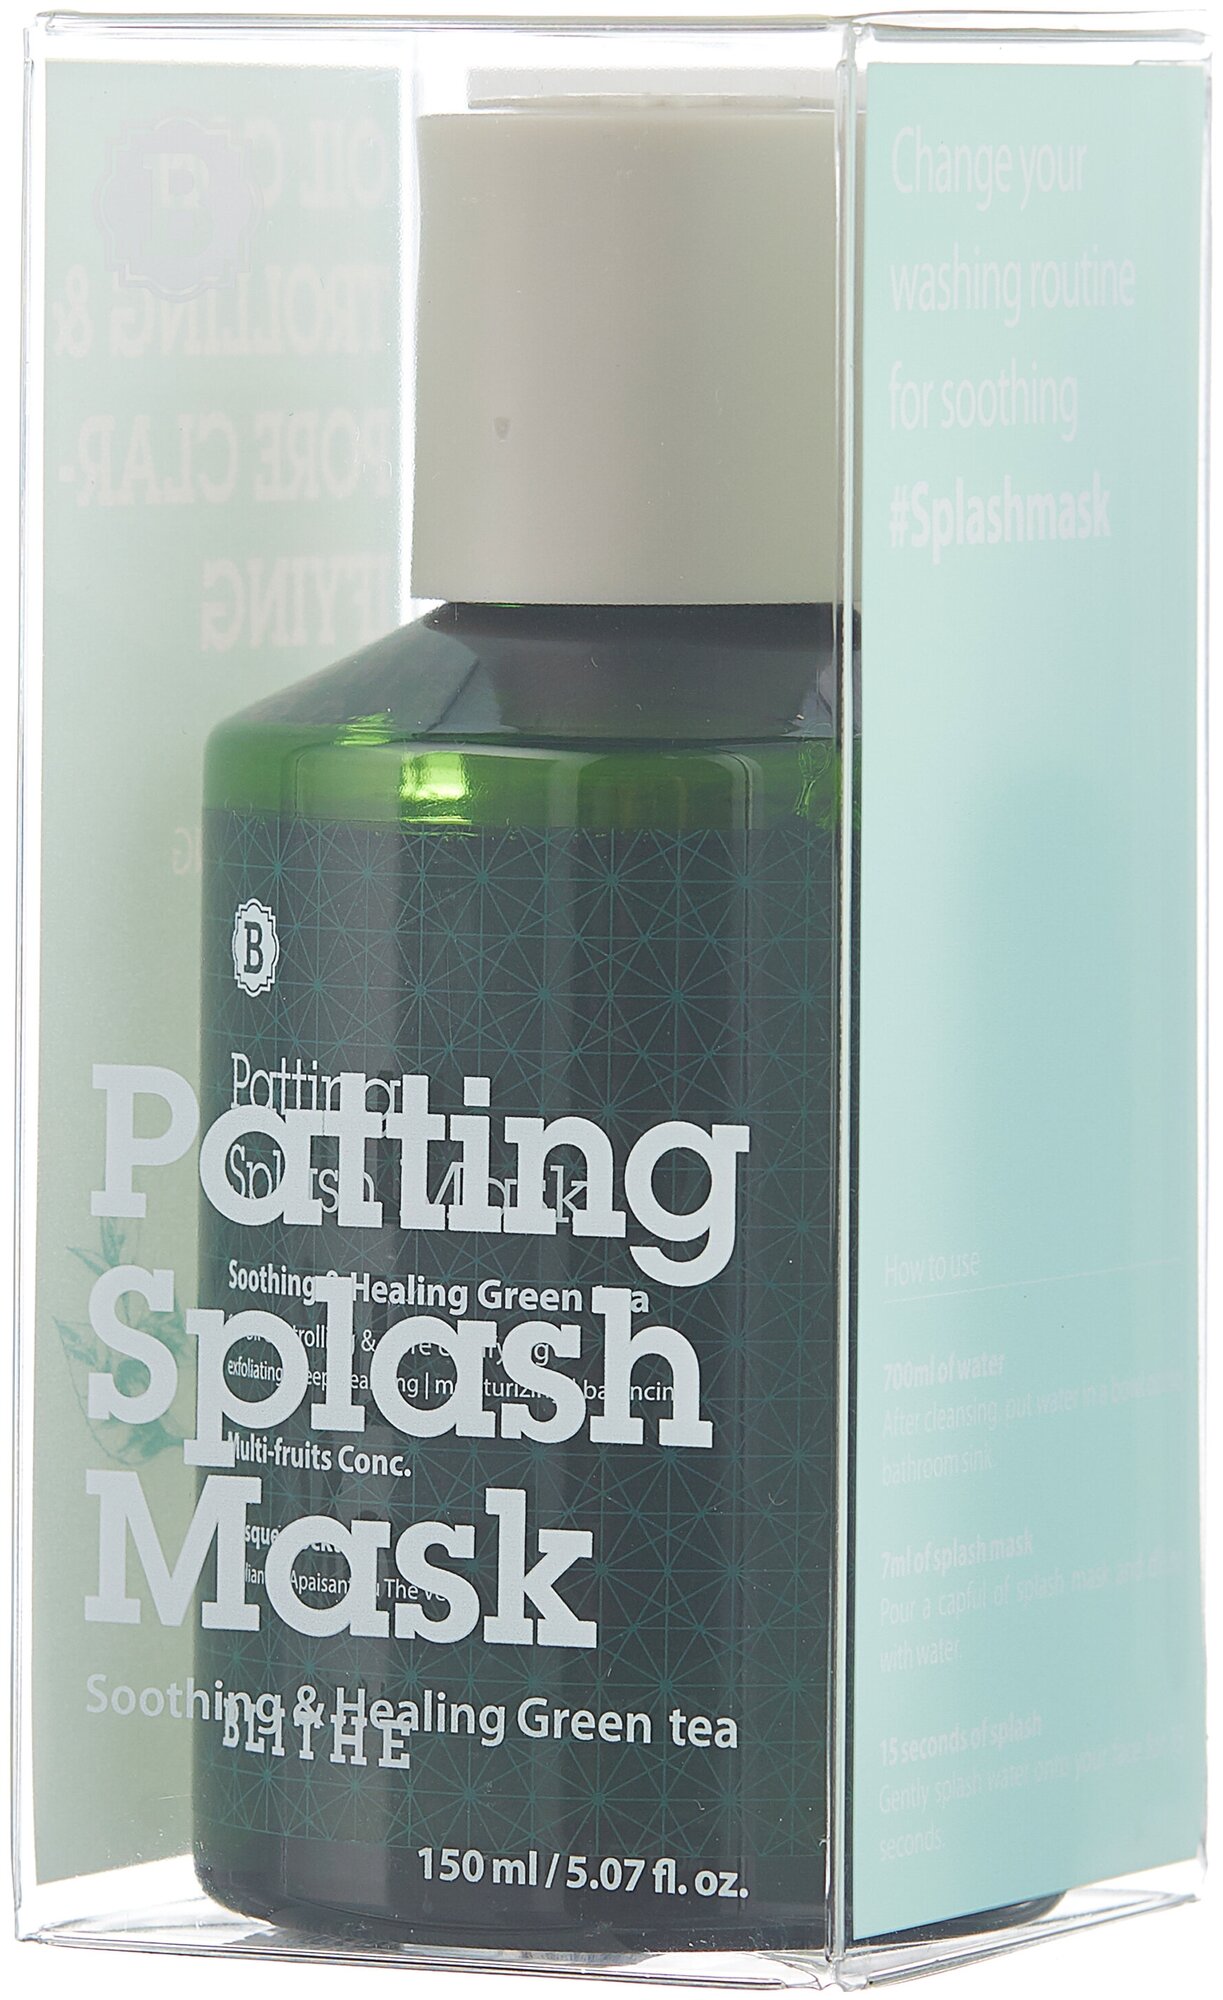 Blithe Patting Splash Mask Soothing & Healing Green Tea Сплэш-маска для лица с экстрактом зелёного чая, 150 мл, 150 мл